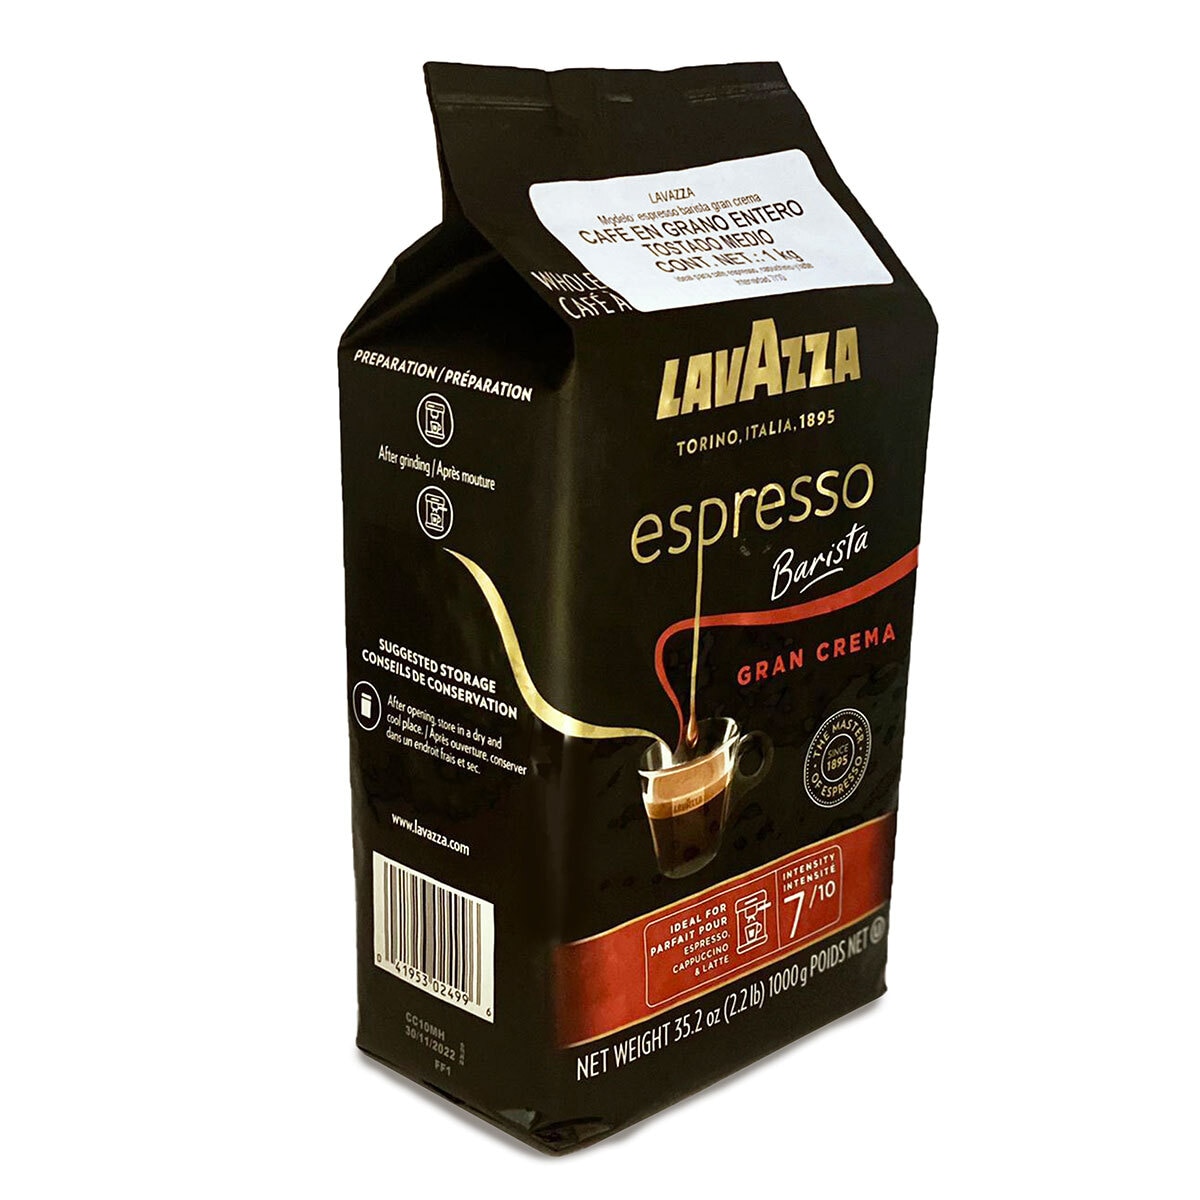 Lavazza Espresso Barista Perfetto - Café en grano entero 100% arábica,  tostado expreso medio, bolsa de 2.2 libras y mezcla de café en grano entero